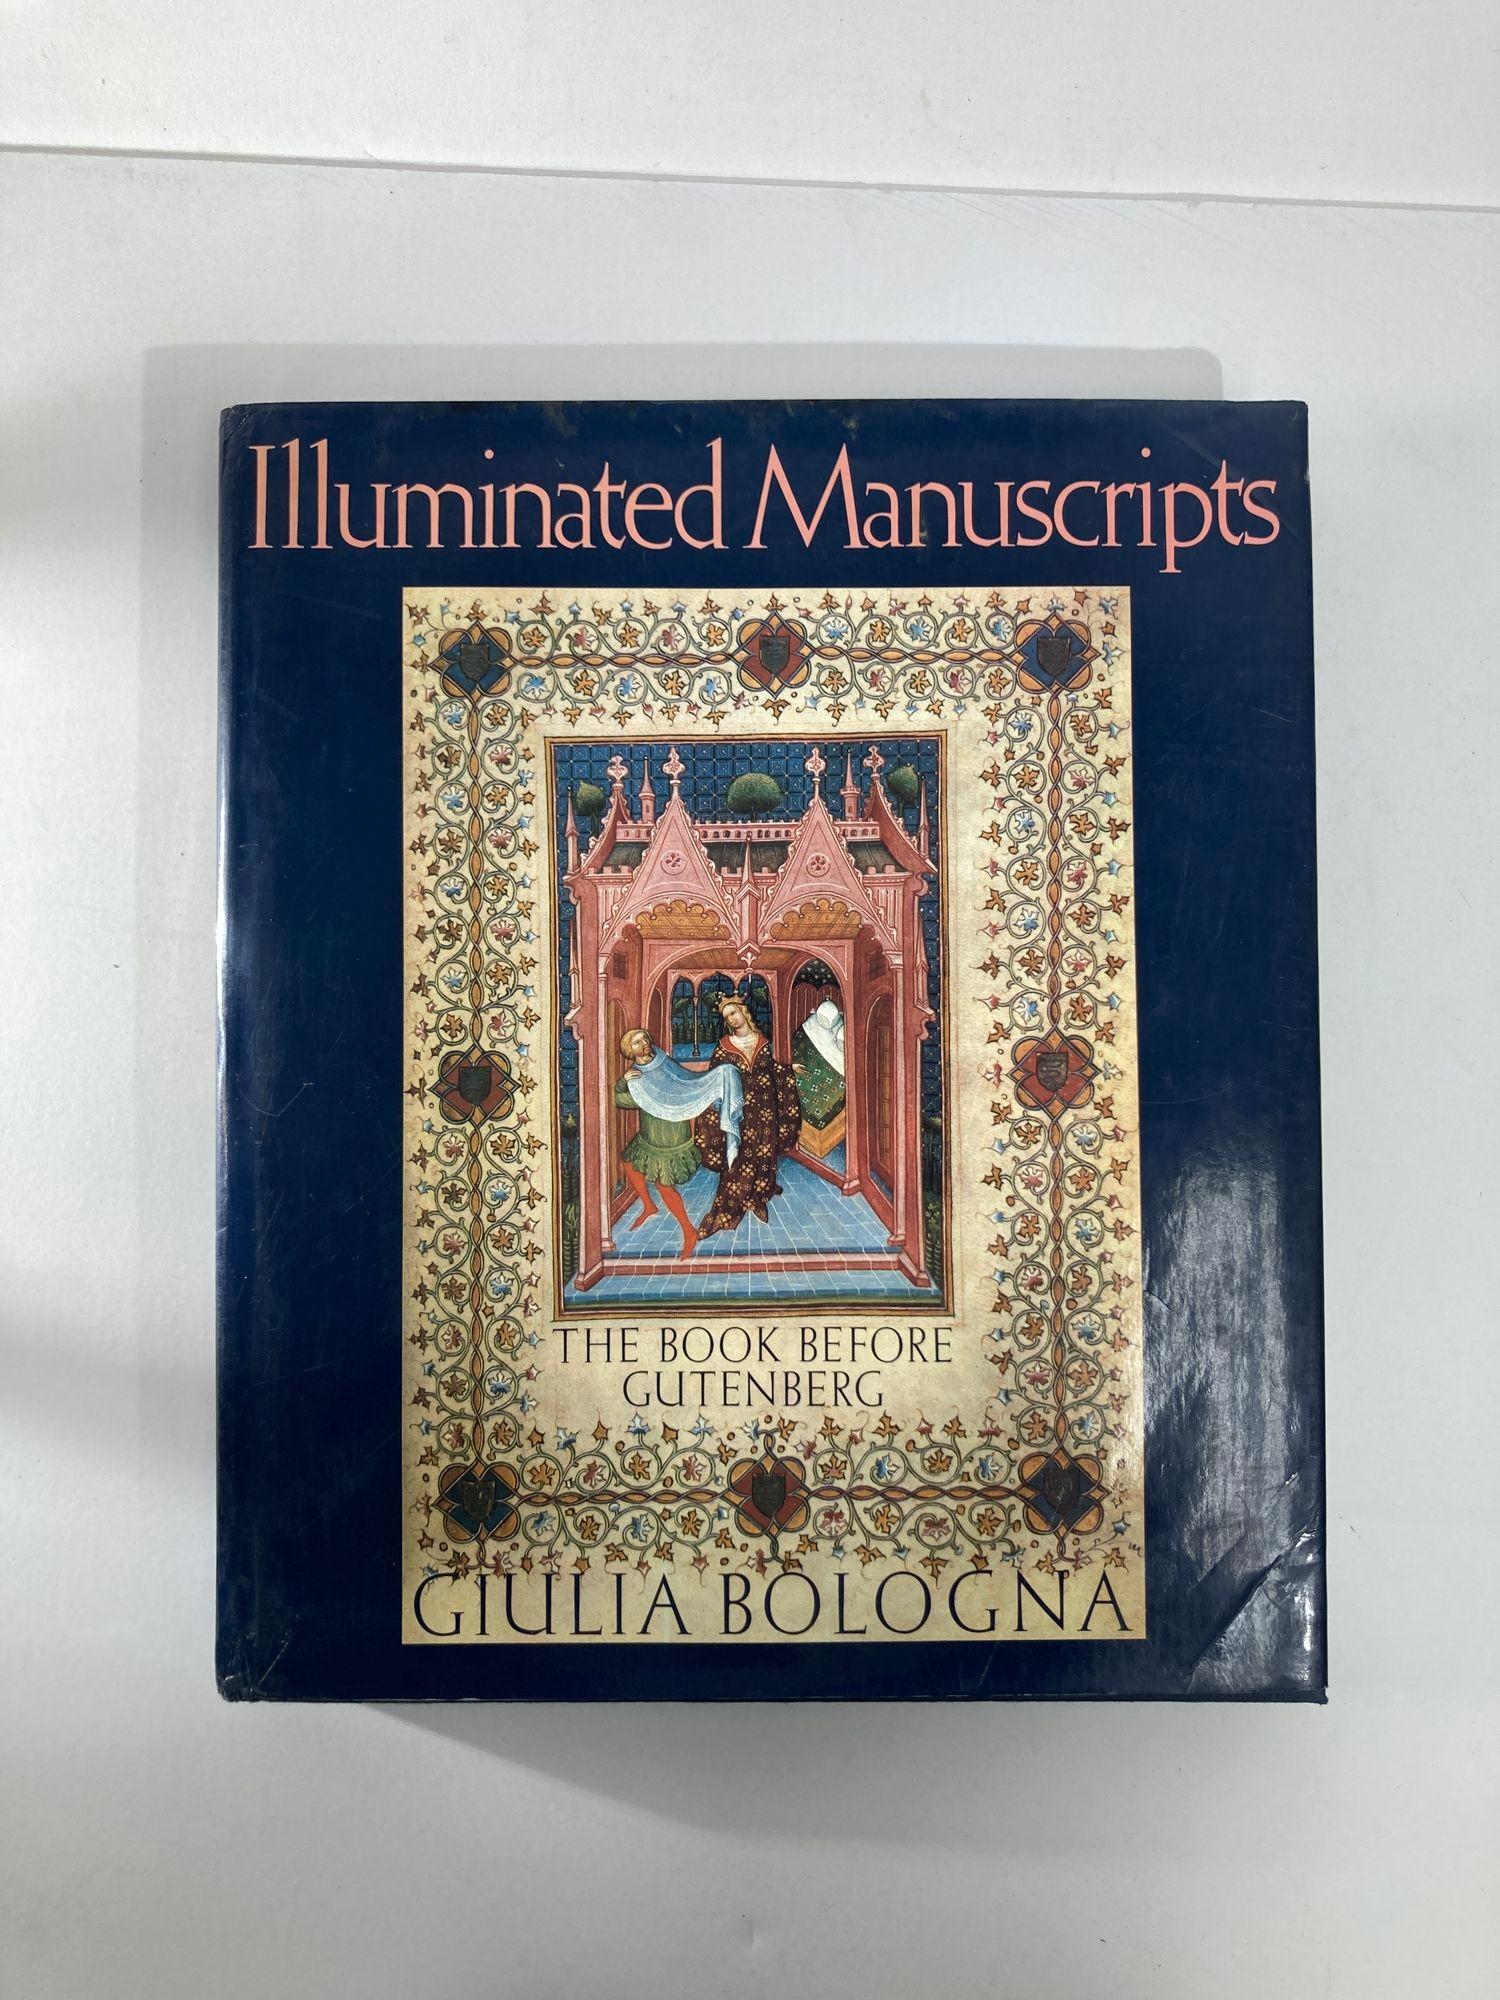 Italian Illuminated Manuscripts, the Book before Gutenberg by Giulia Bologna